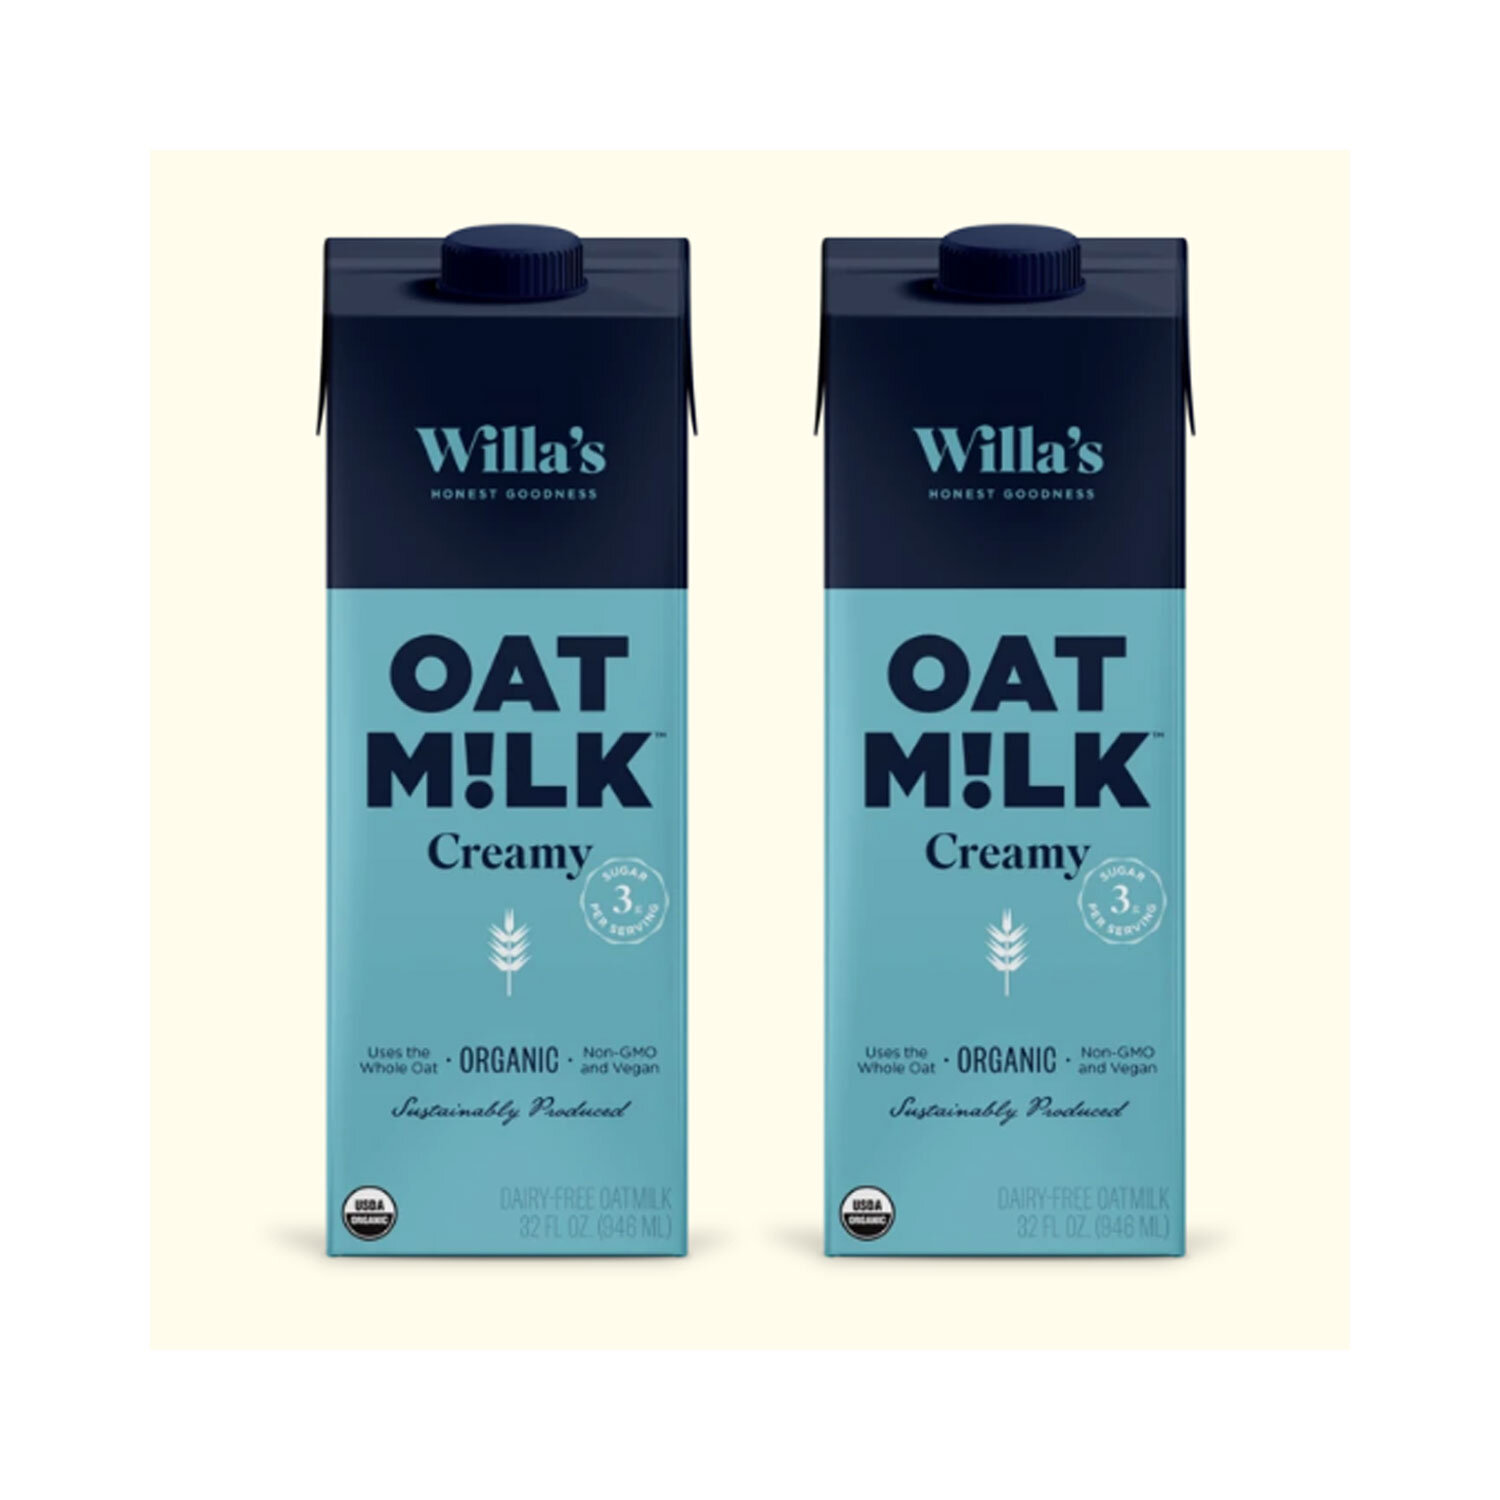 Willa’s Oat Milk